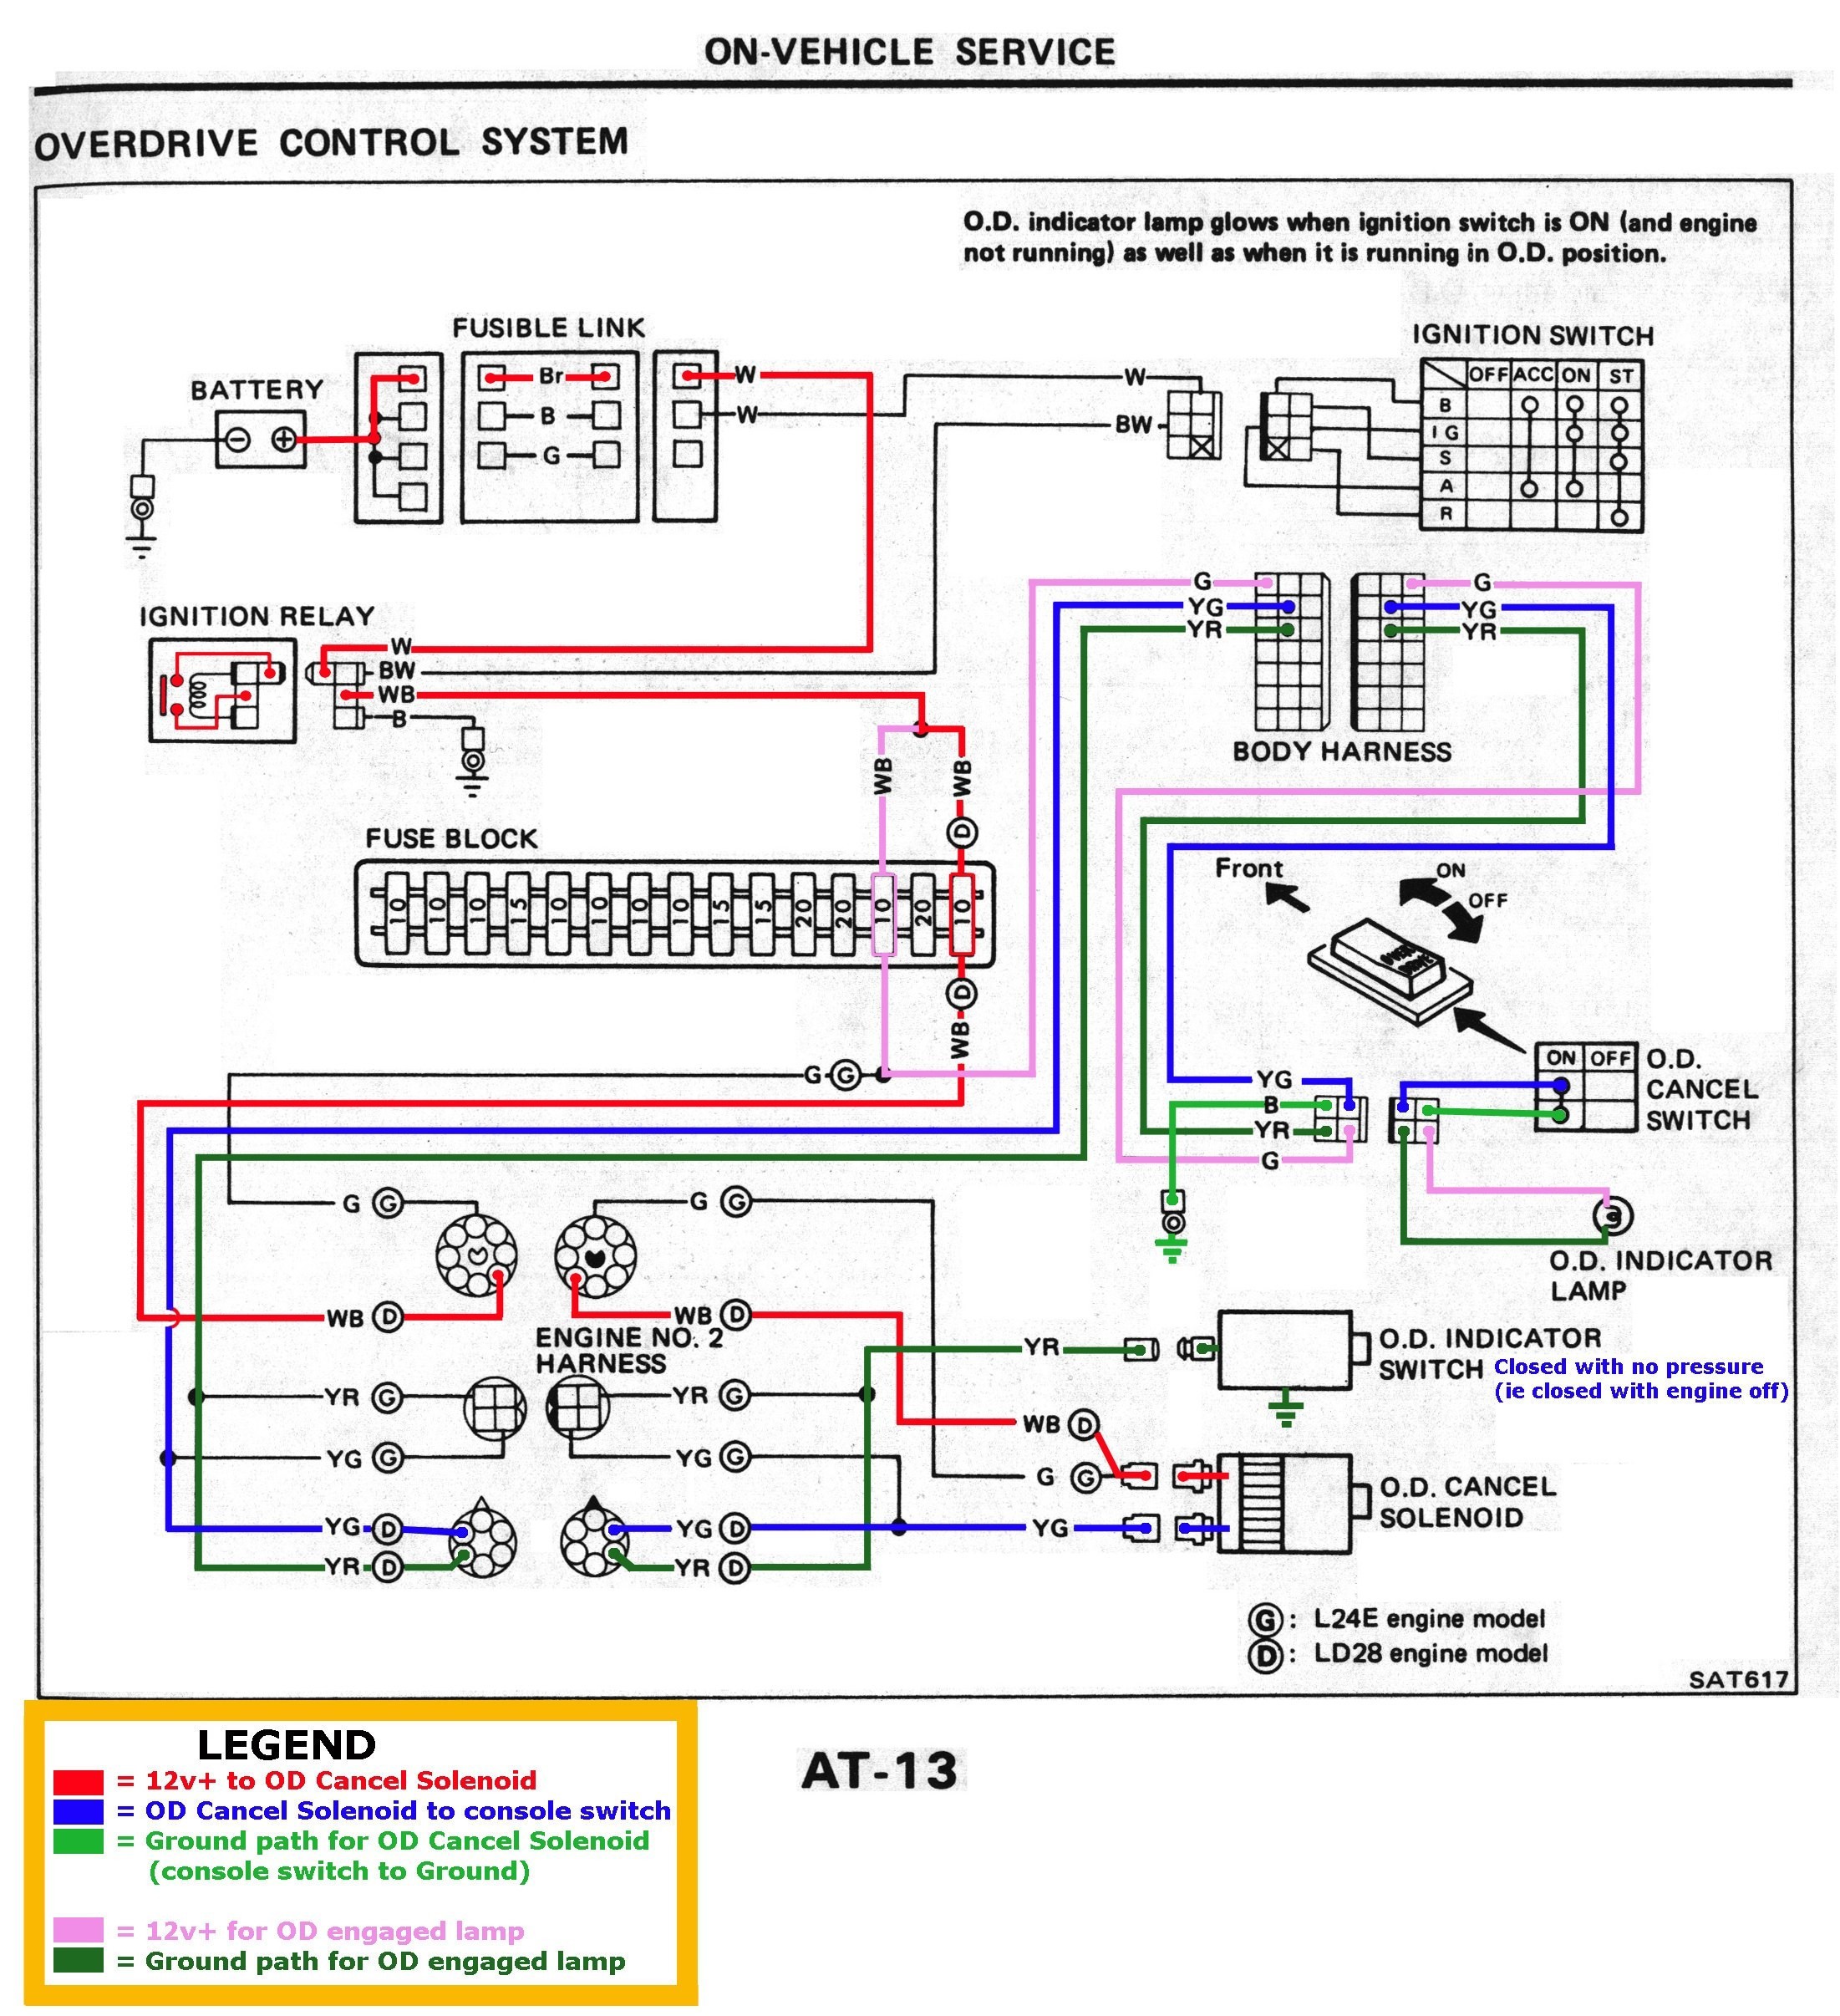 Wiring Diagram Motor Honda Beat Valid Wiring Diagram Auto Gate Reference Wiring Diagram for Auto Gate